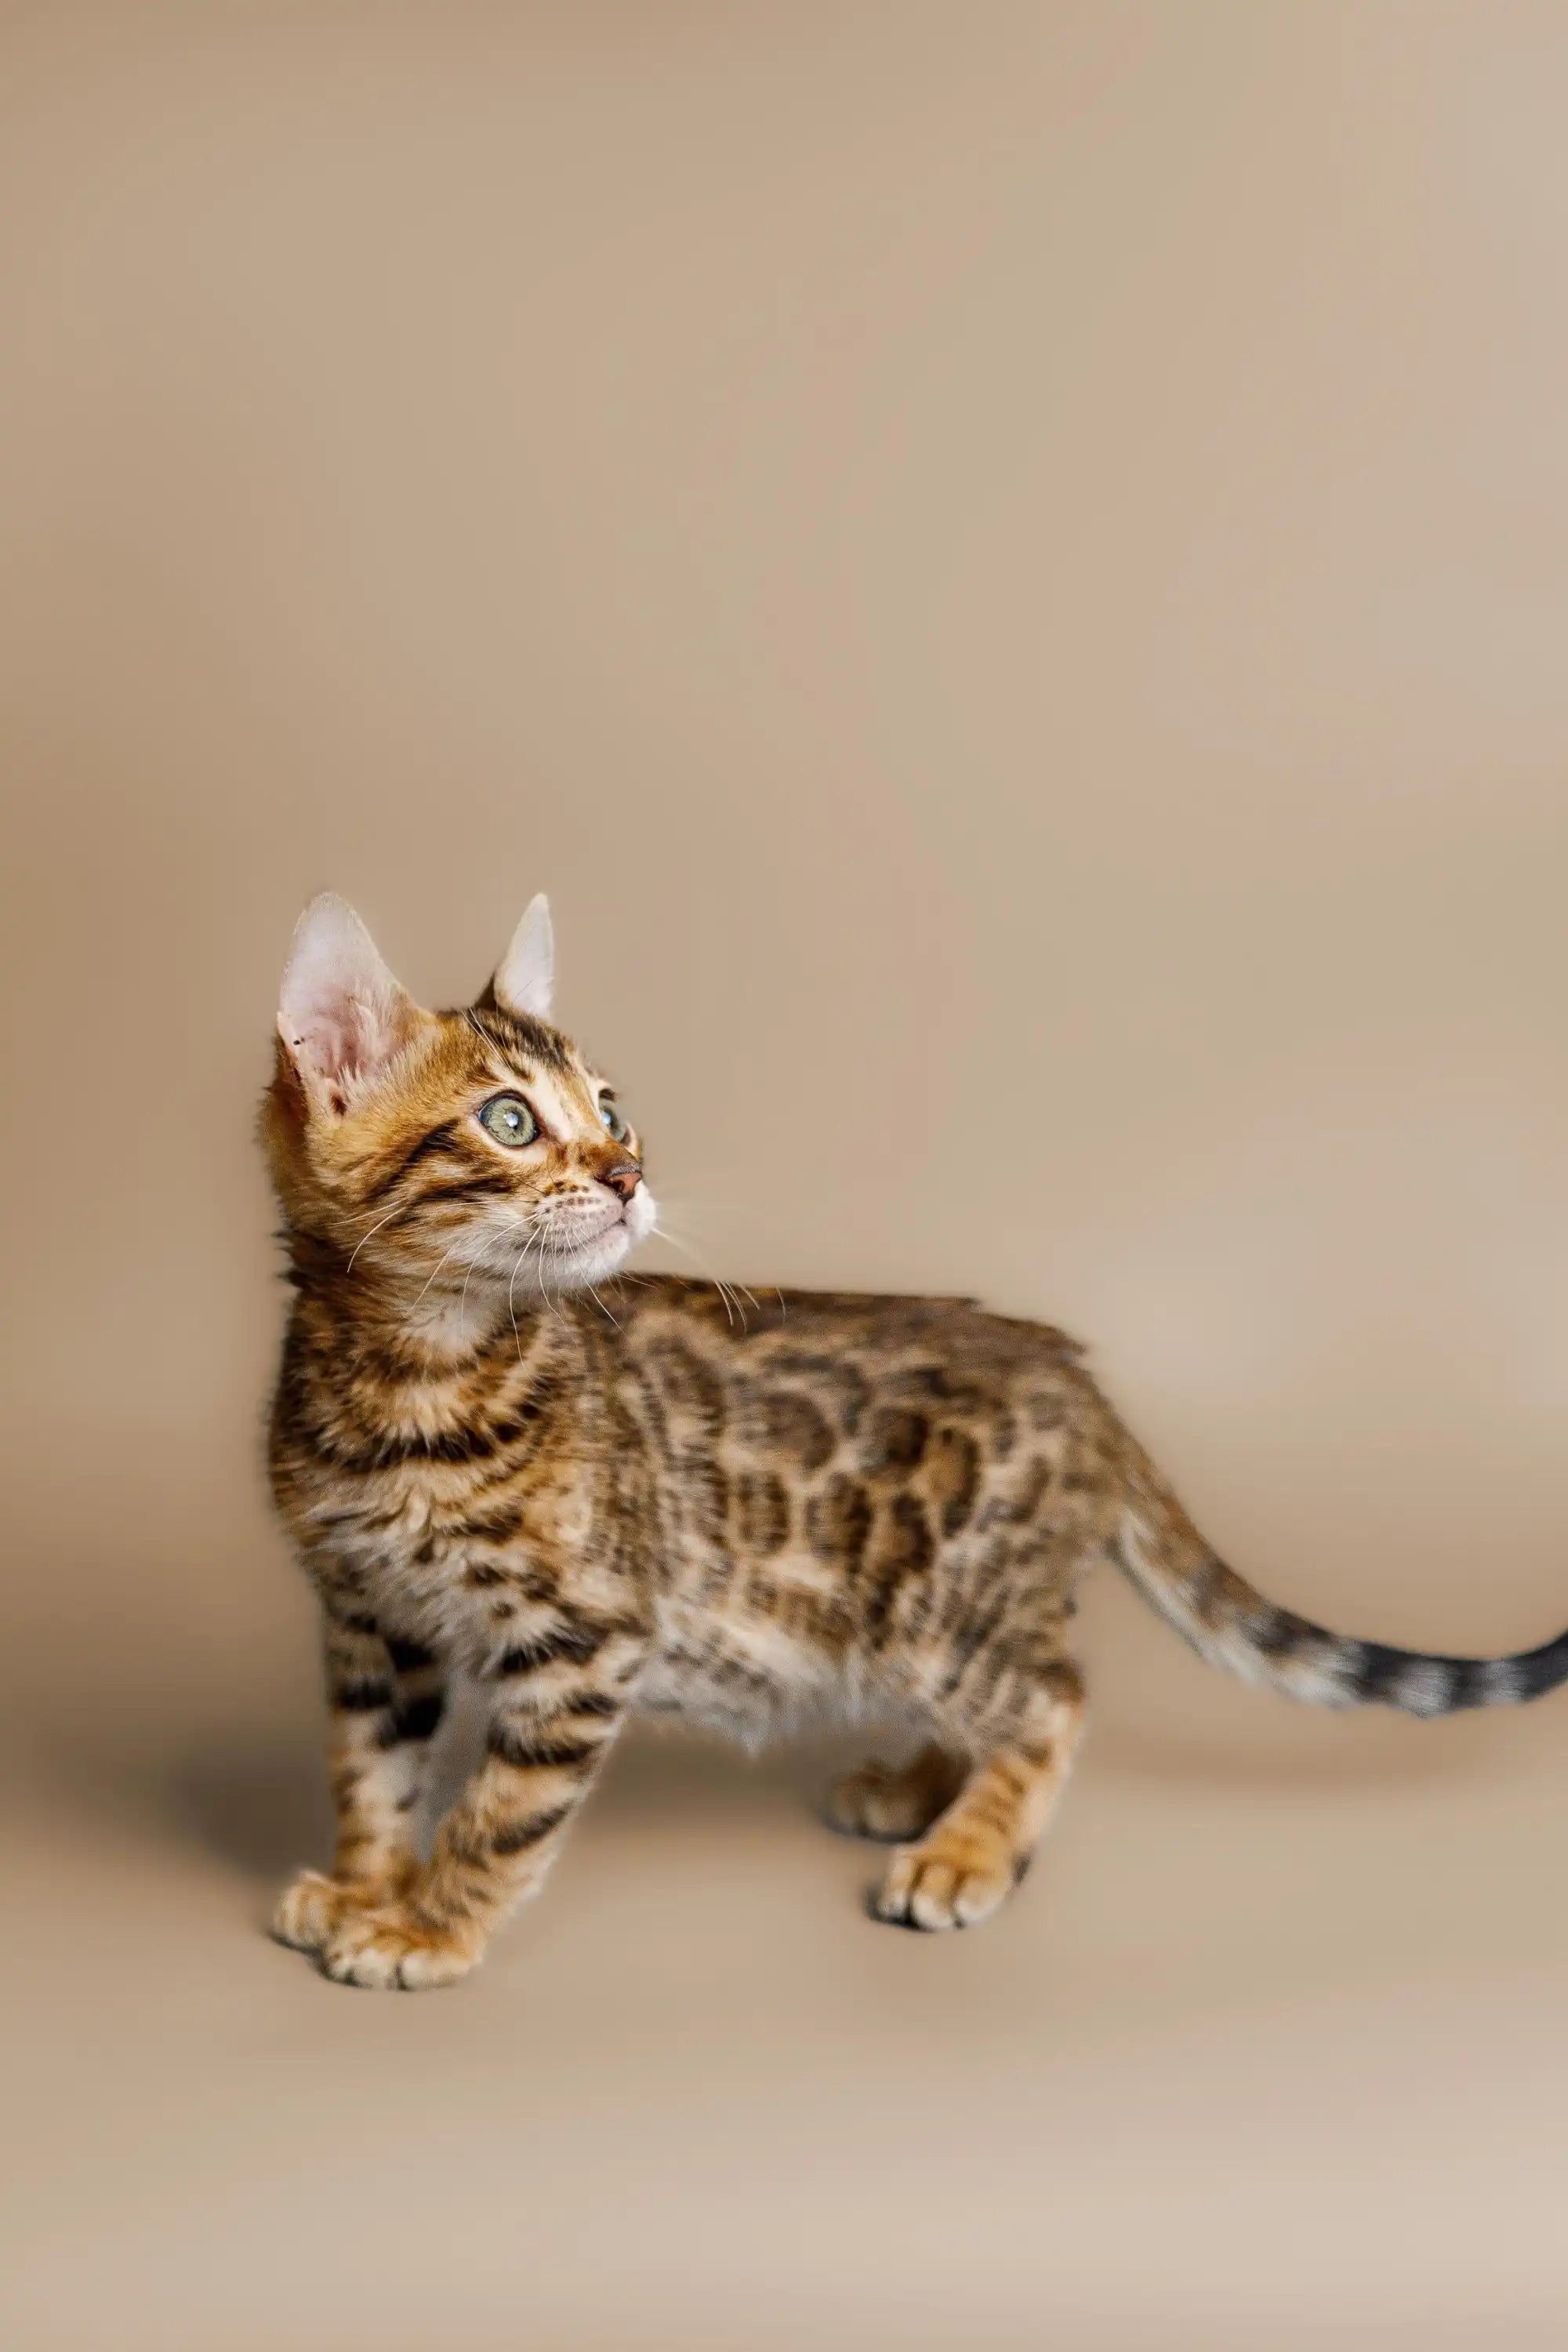 Bengal Kittens For Sale Cutie | Kitten